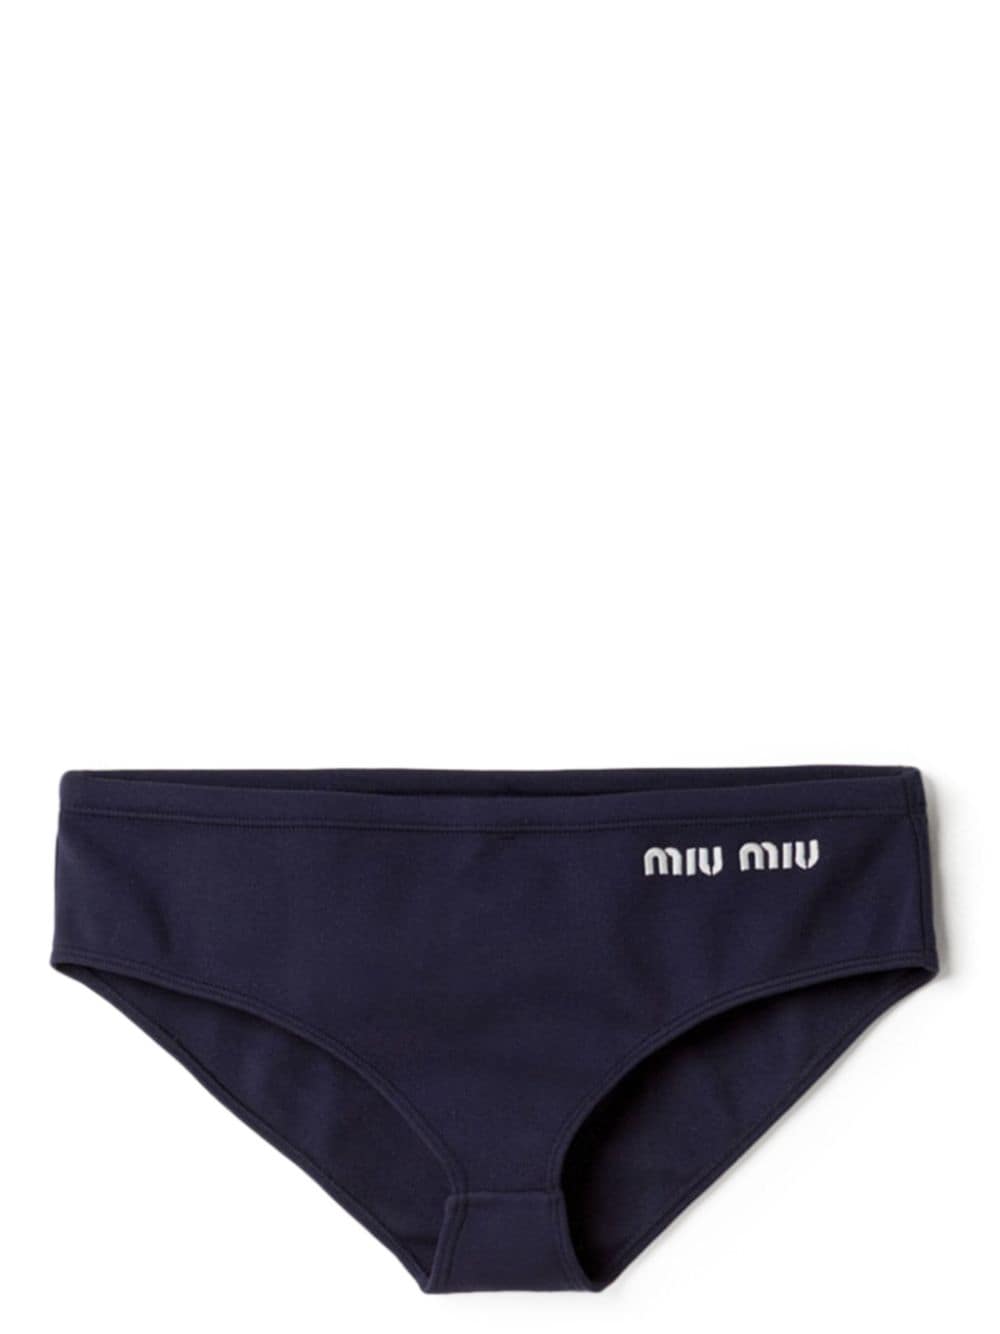 Image 1 of Miu Miu logo-embroidered bikini bottoms